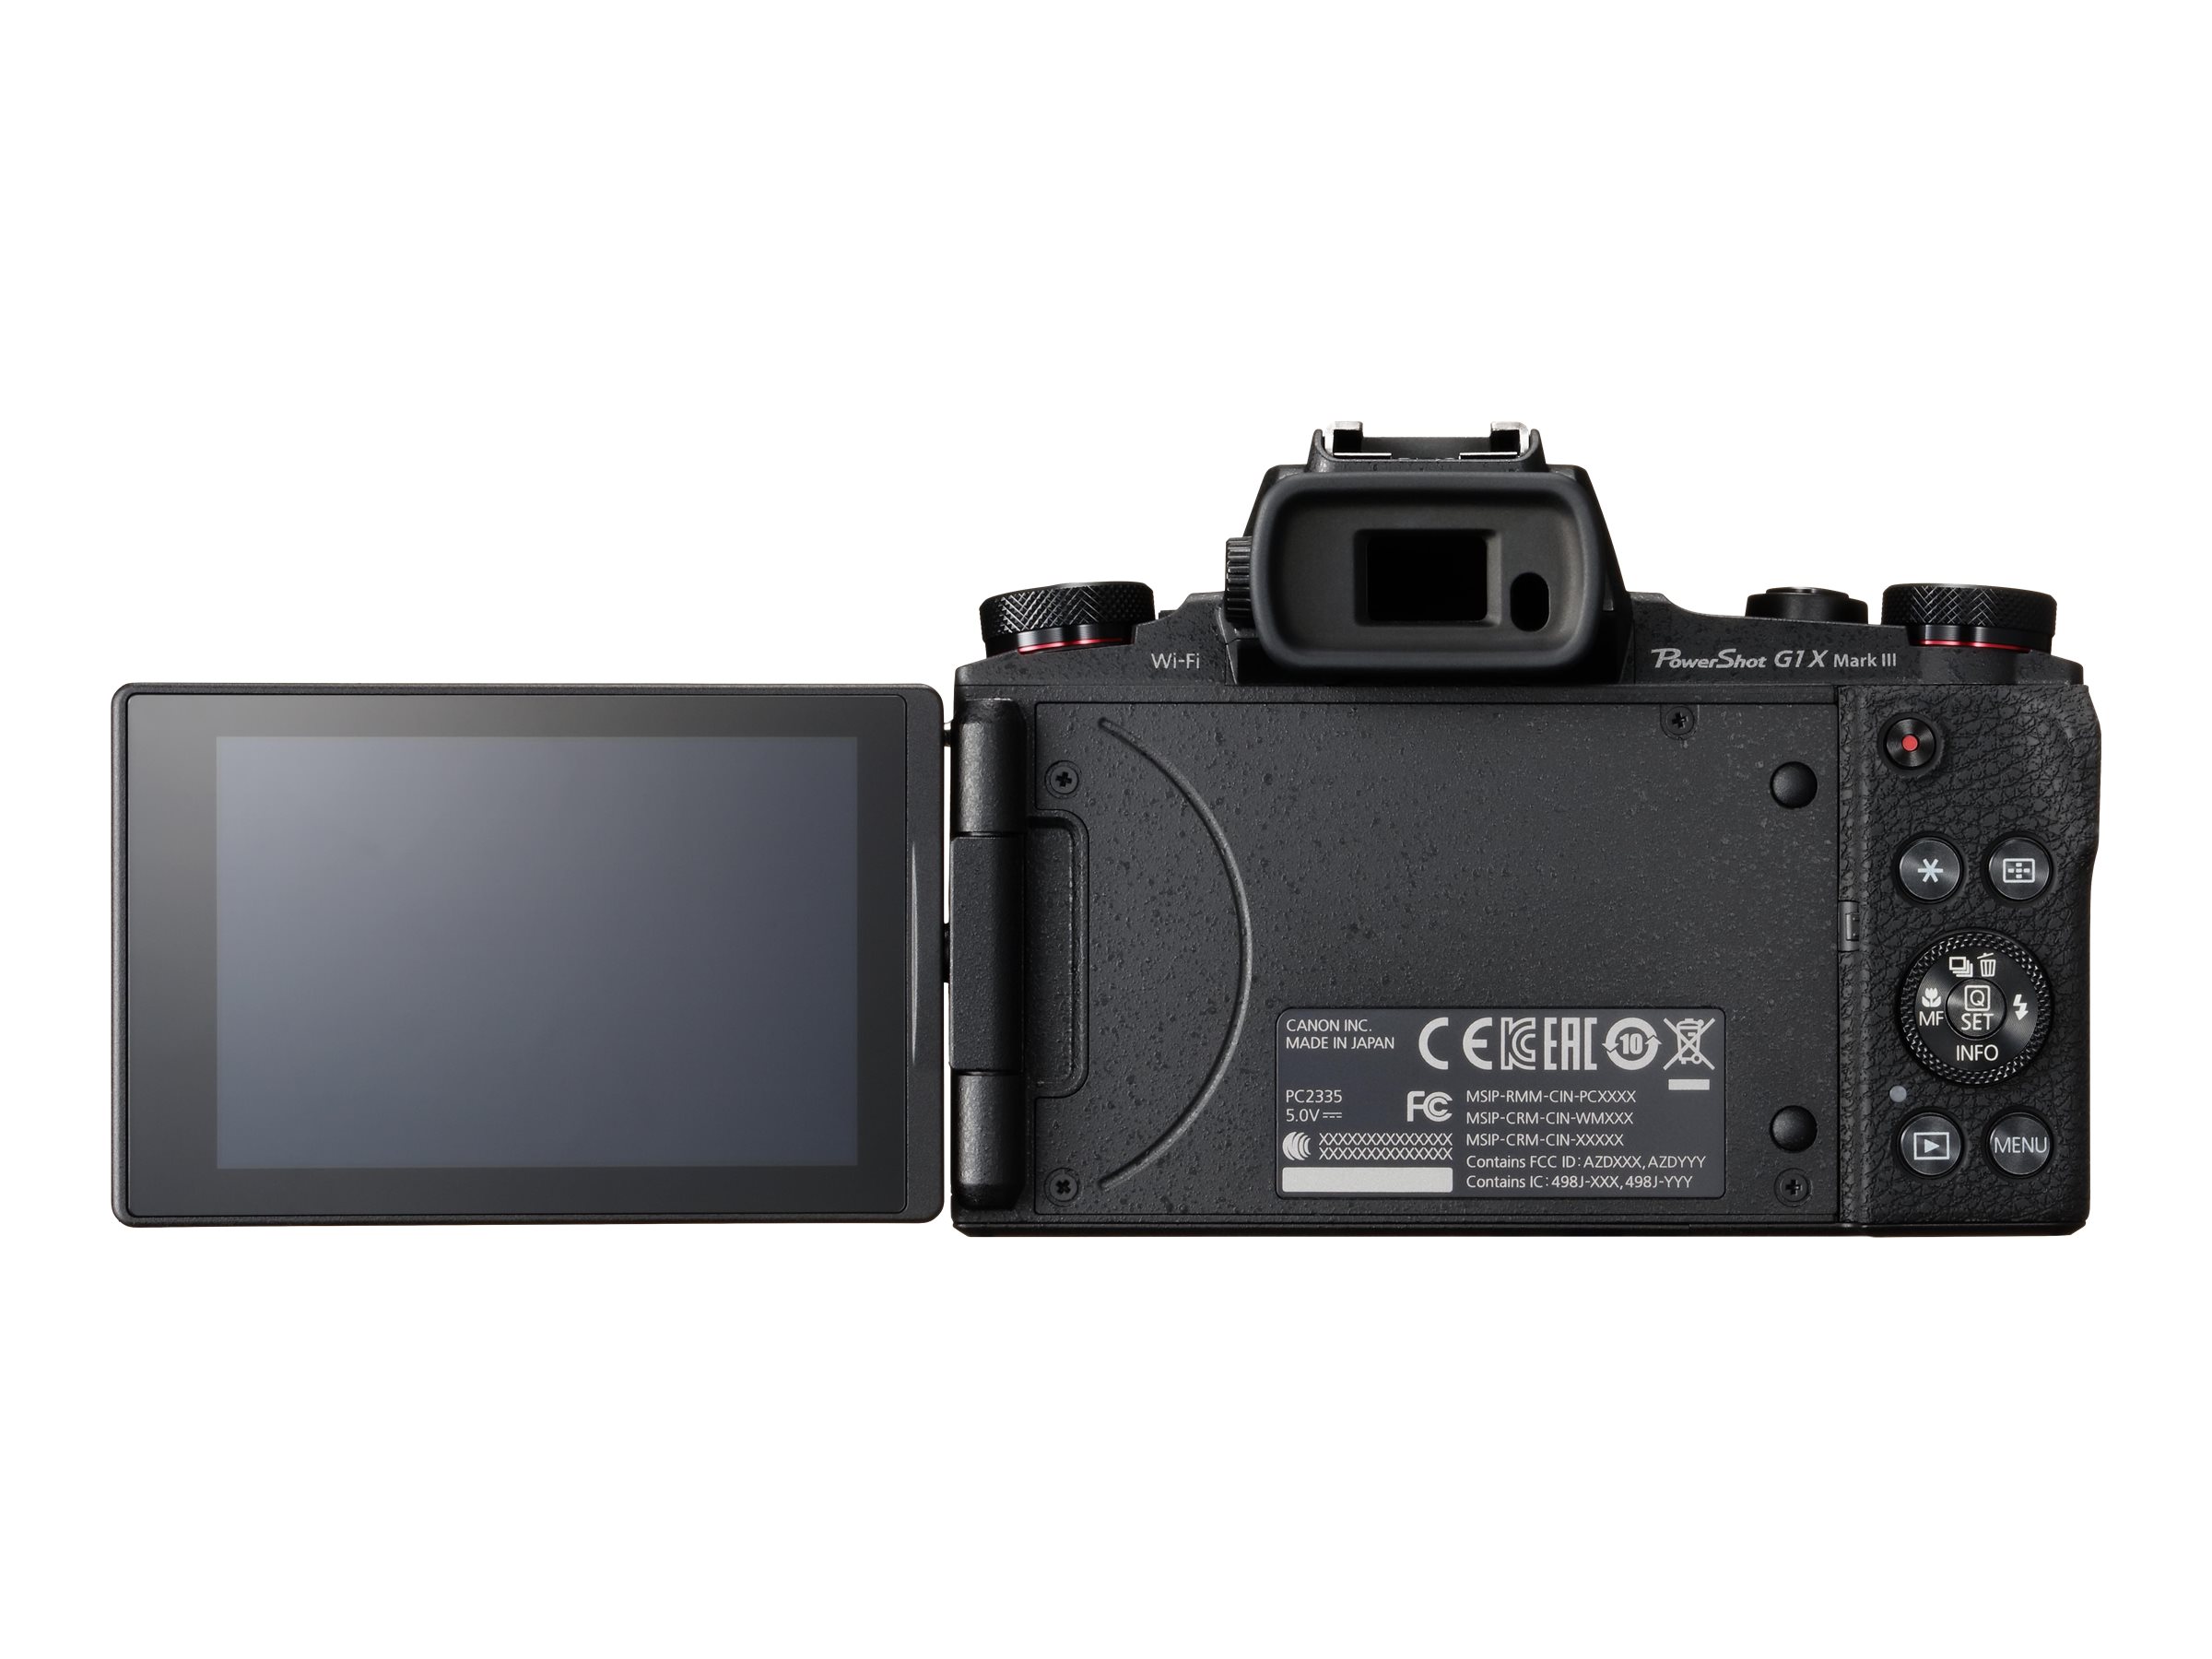 Canon PowerShot G1 X Mark III - Digital camera - compact - 24.2 MP - APS-C - 1080p / 60 fps - 3x optical zoom - Wireless LAN, NFC, Bluetooth - image 5 of 7